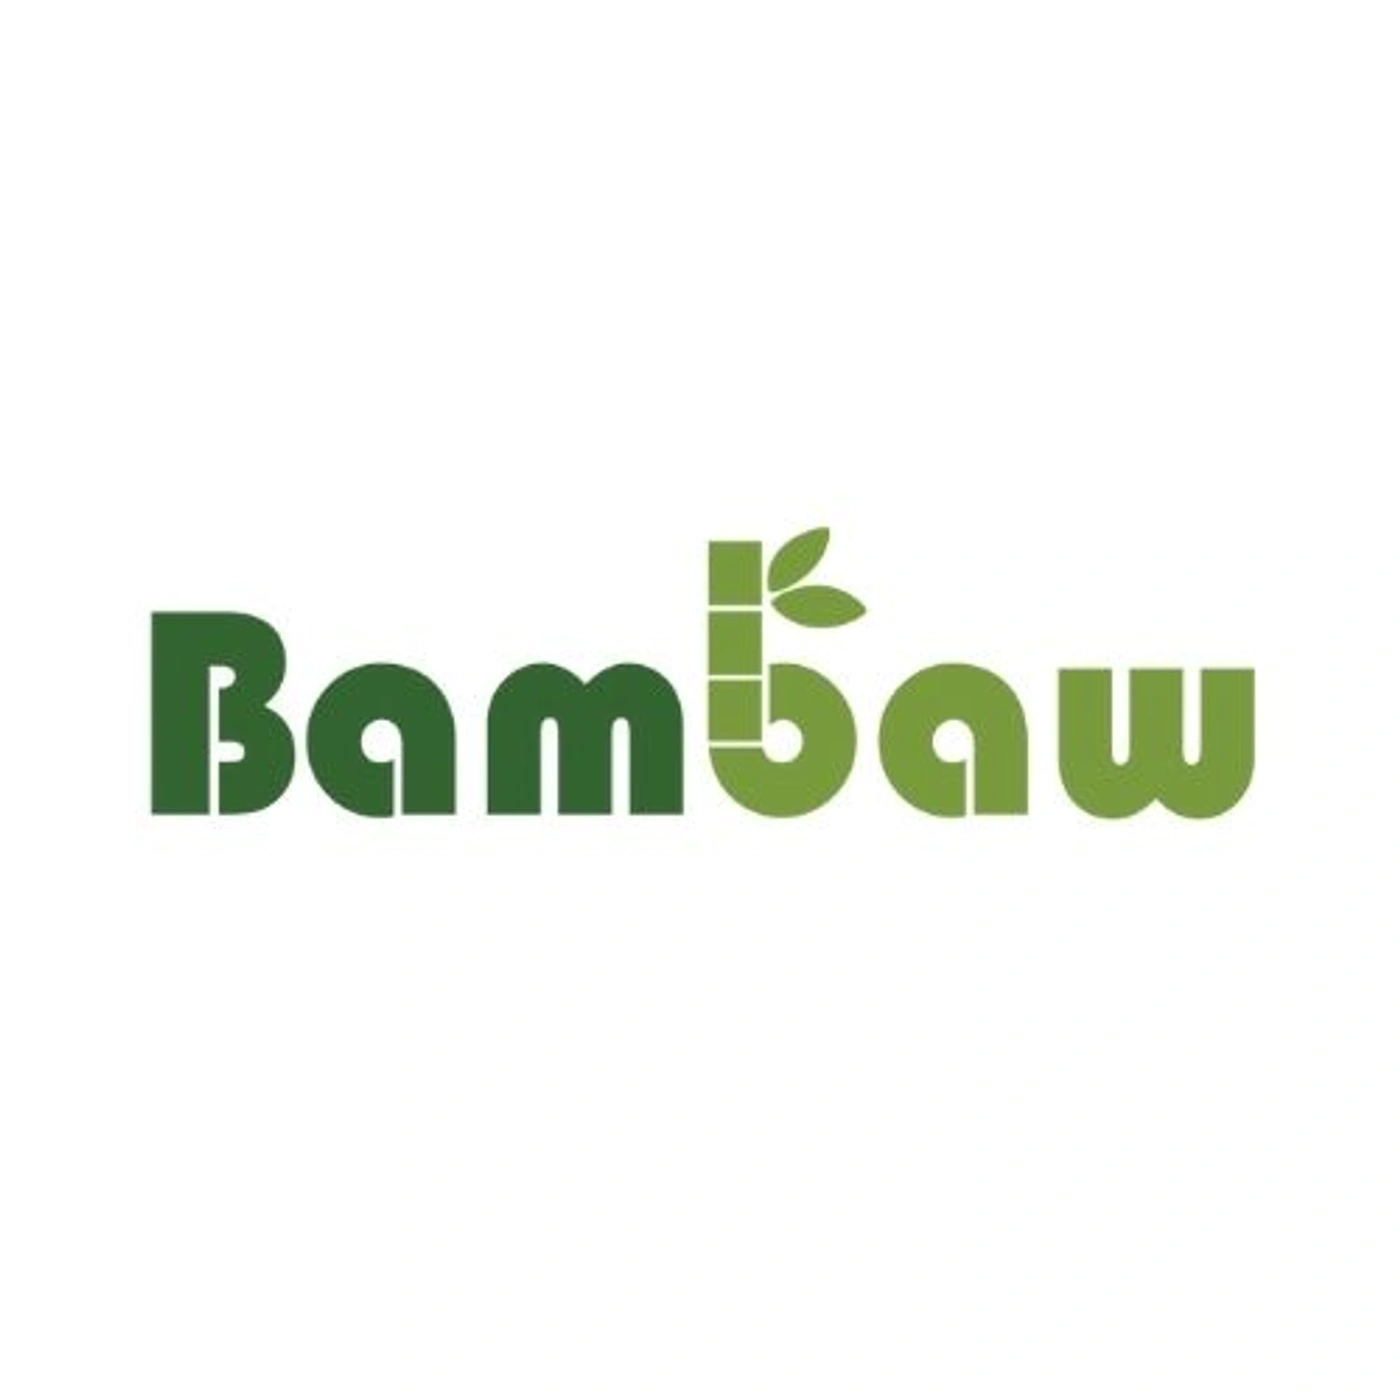 Logo de l'entreprise Bambaw pour l'offre d'emploi Digital Marketing & Social Media Internship